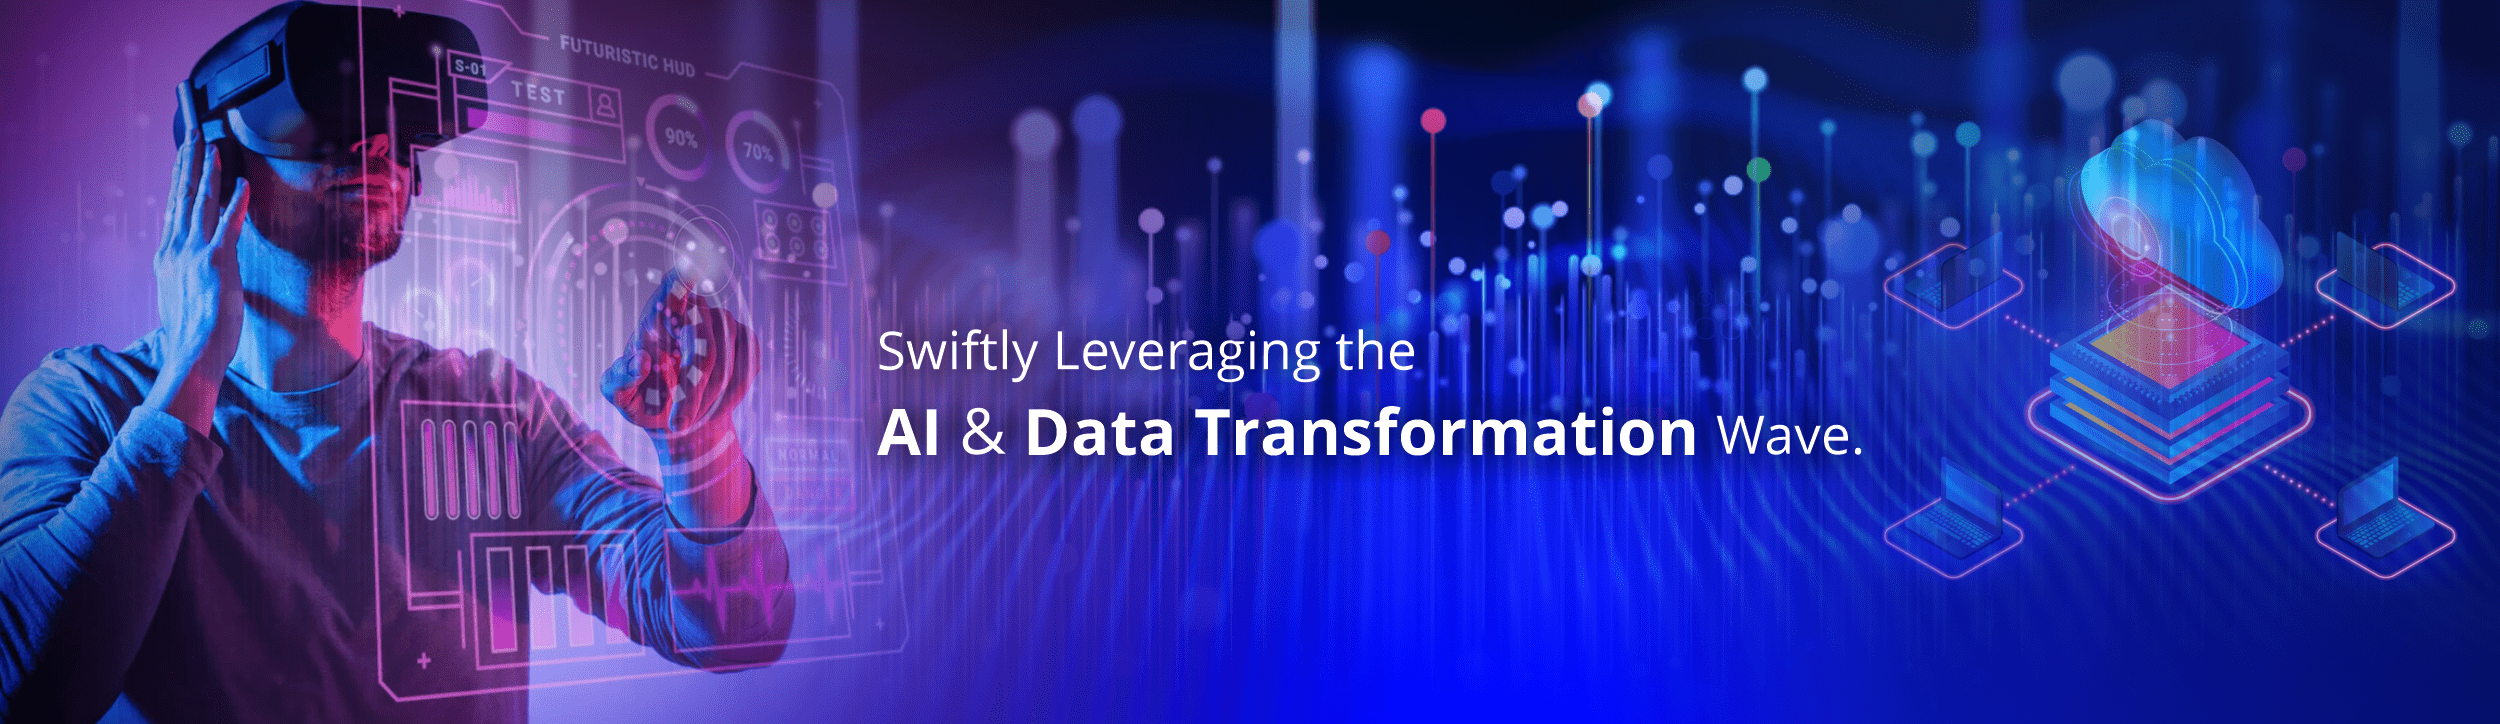 Data & AI-Powered Transformation